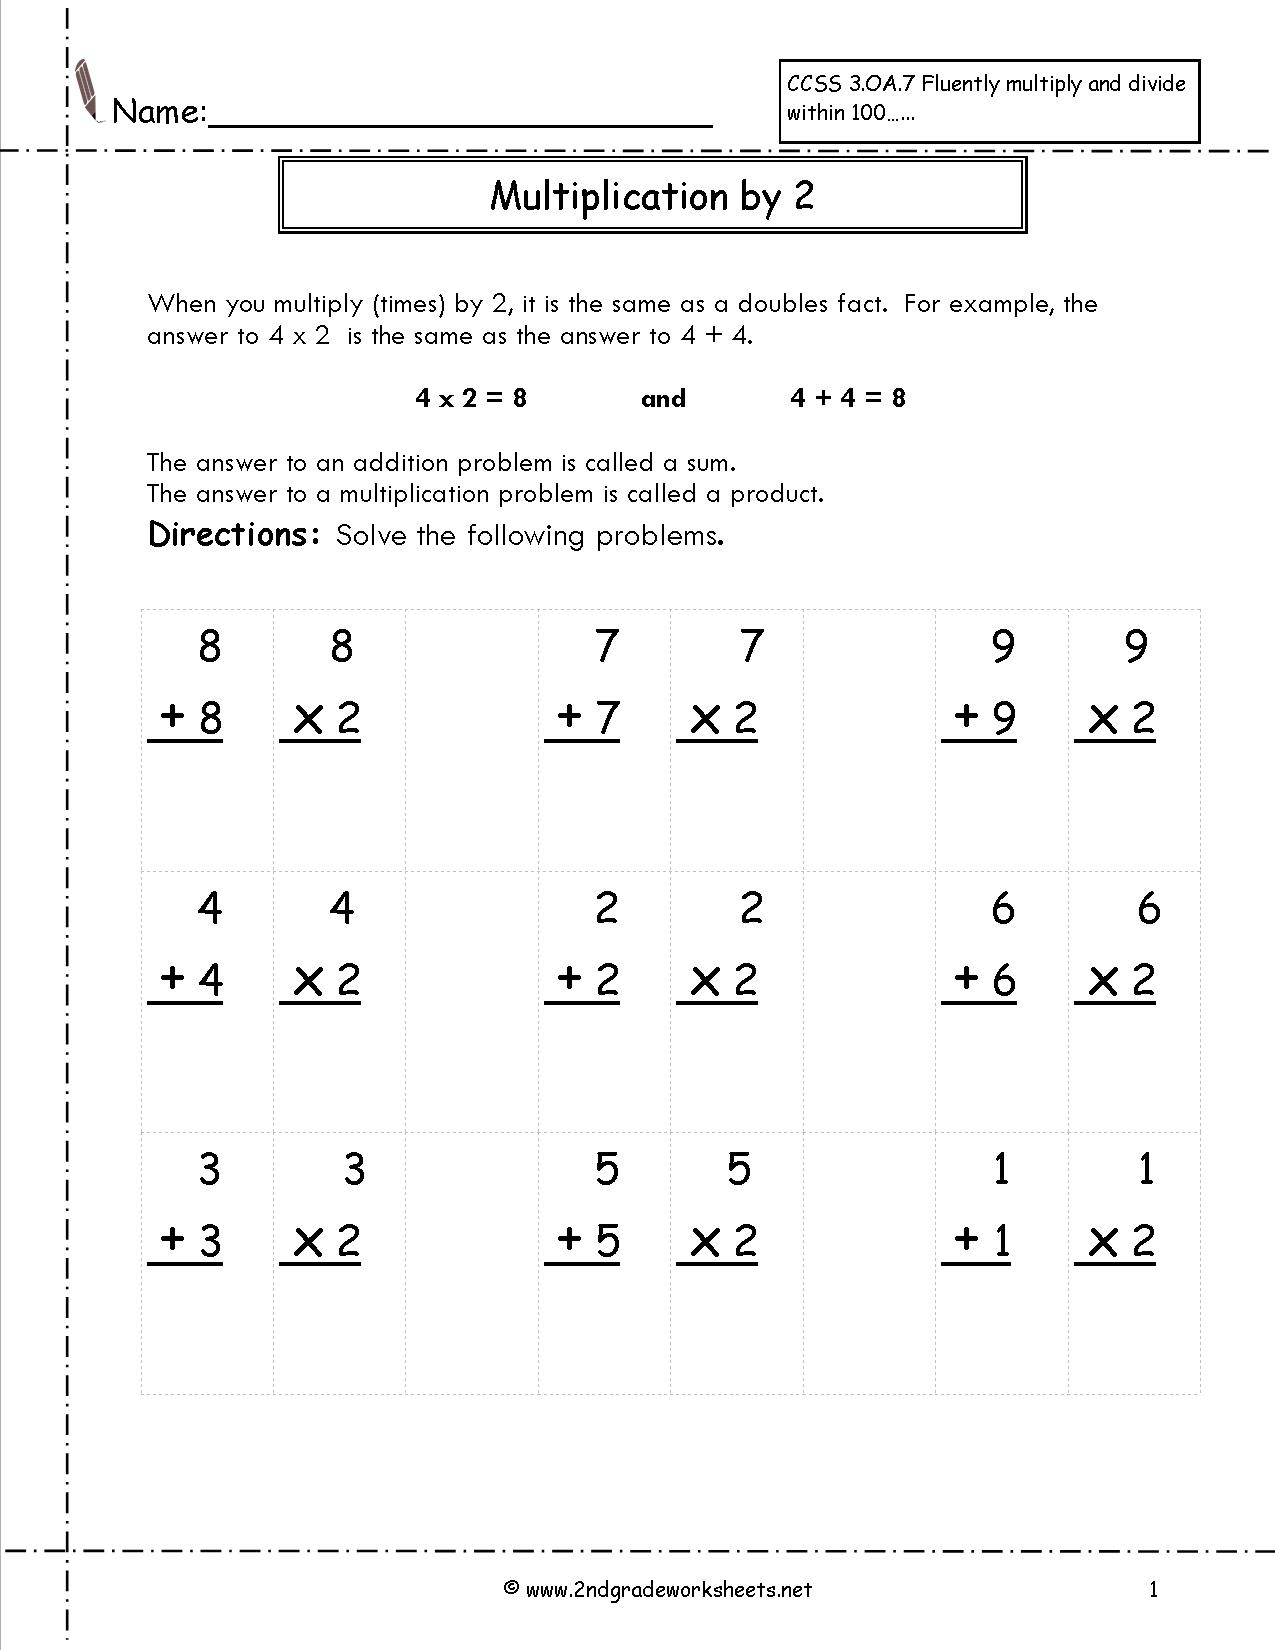 Multiplication Worksheets 2S – PrintableMultiplication.com